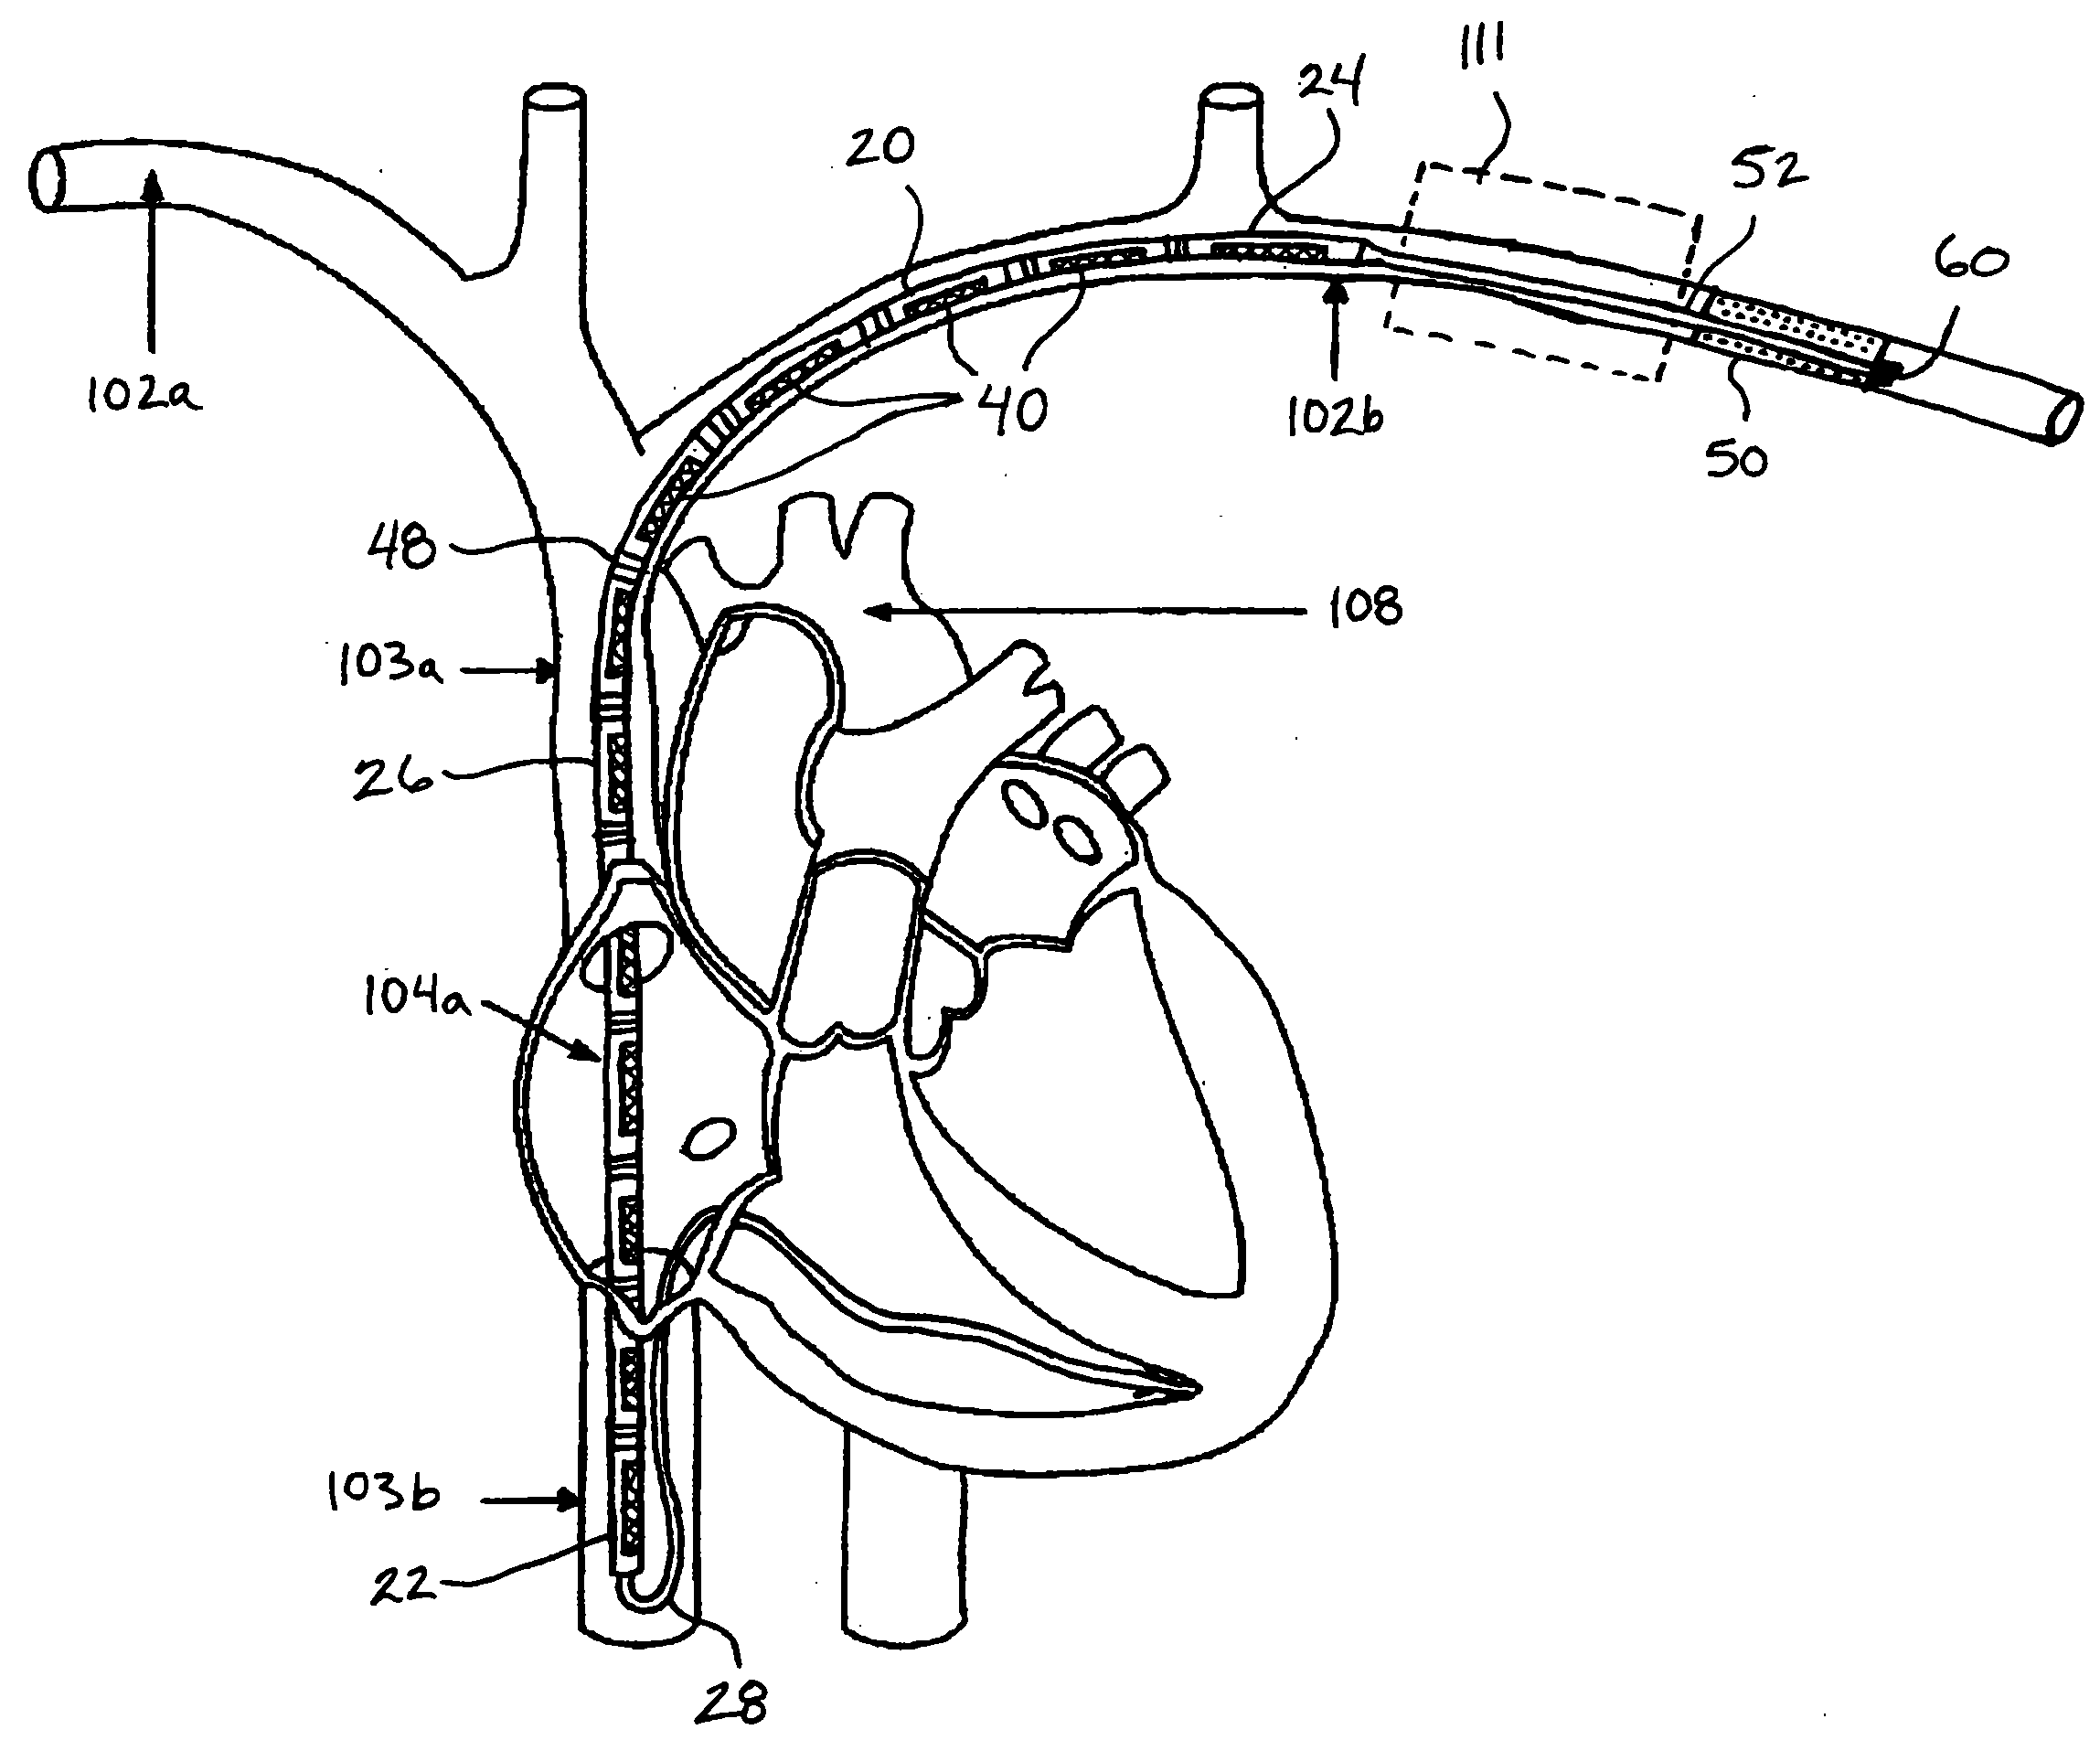 Intravascular implantable device having superior anchoring arrangement